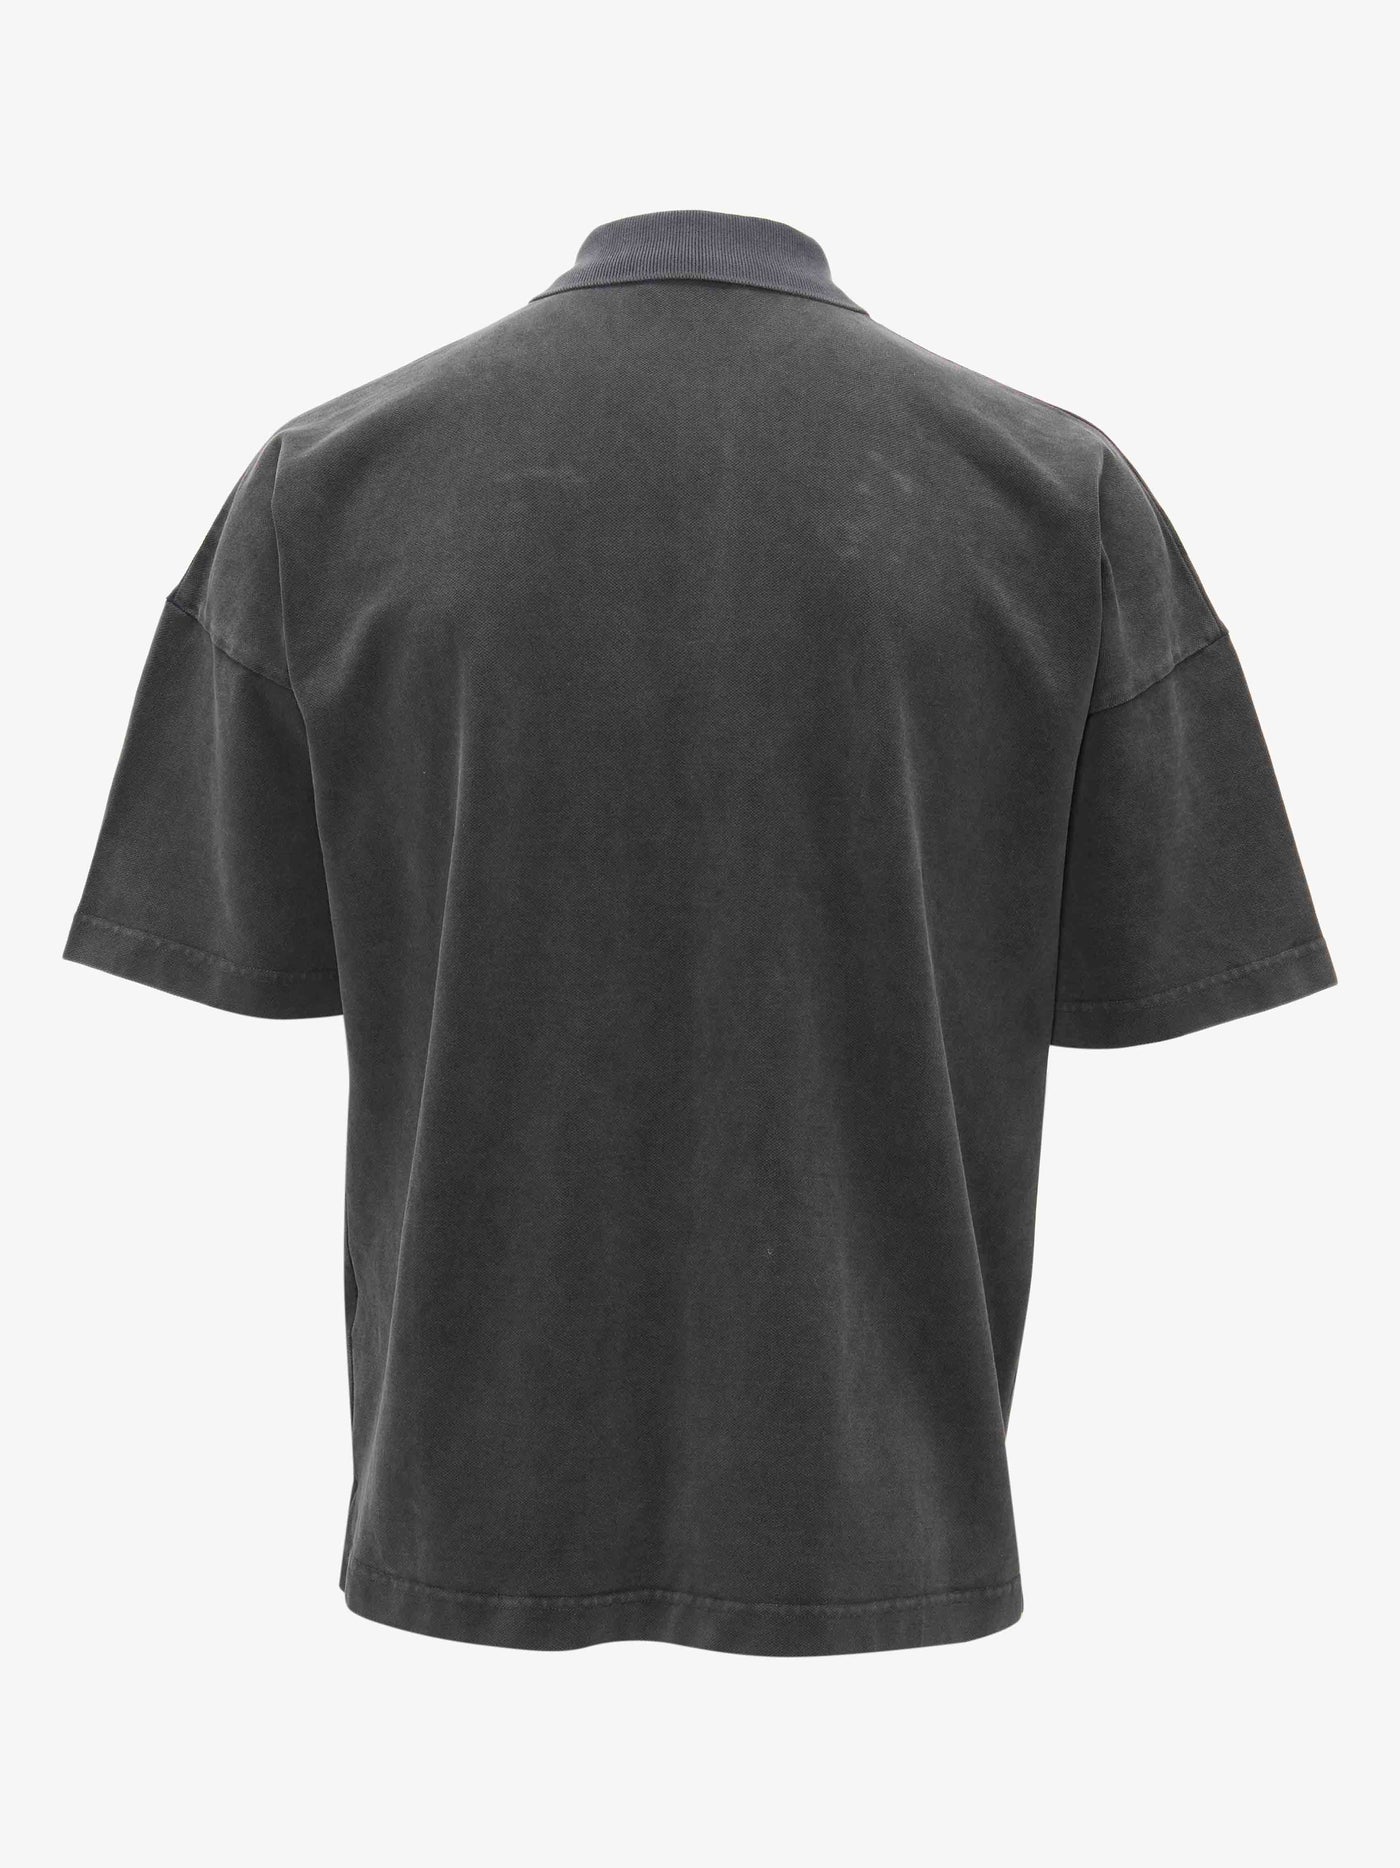 Anchor Short Sleeve Polo Shirt (Charcoal)